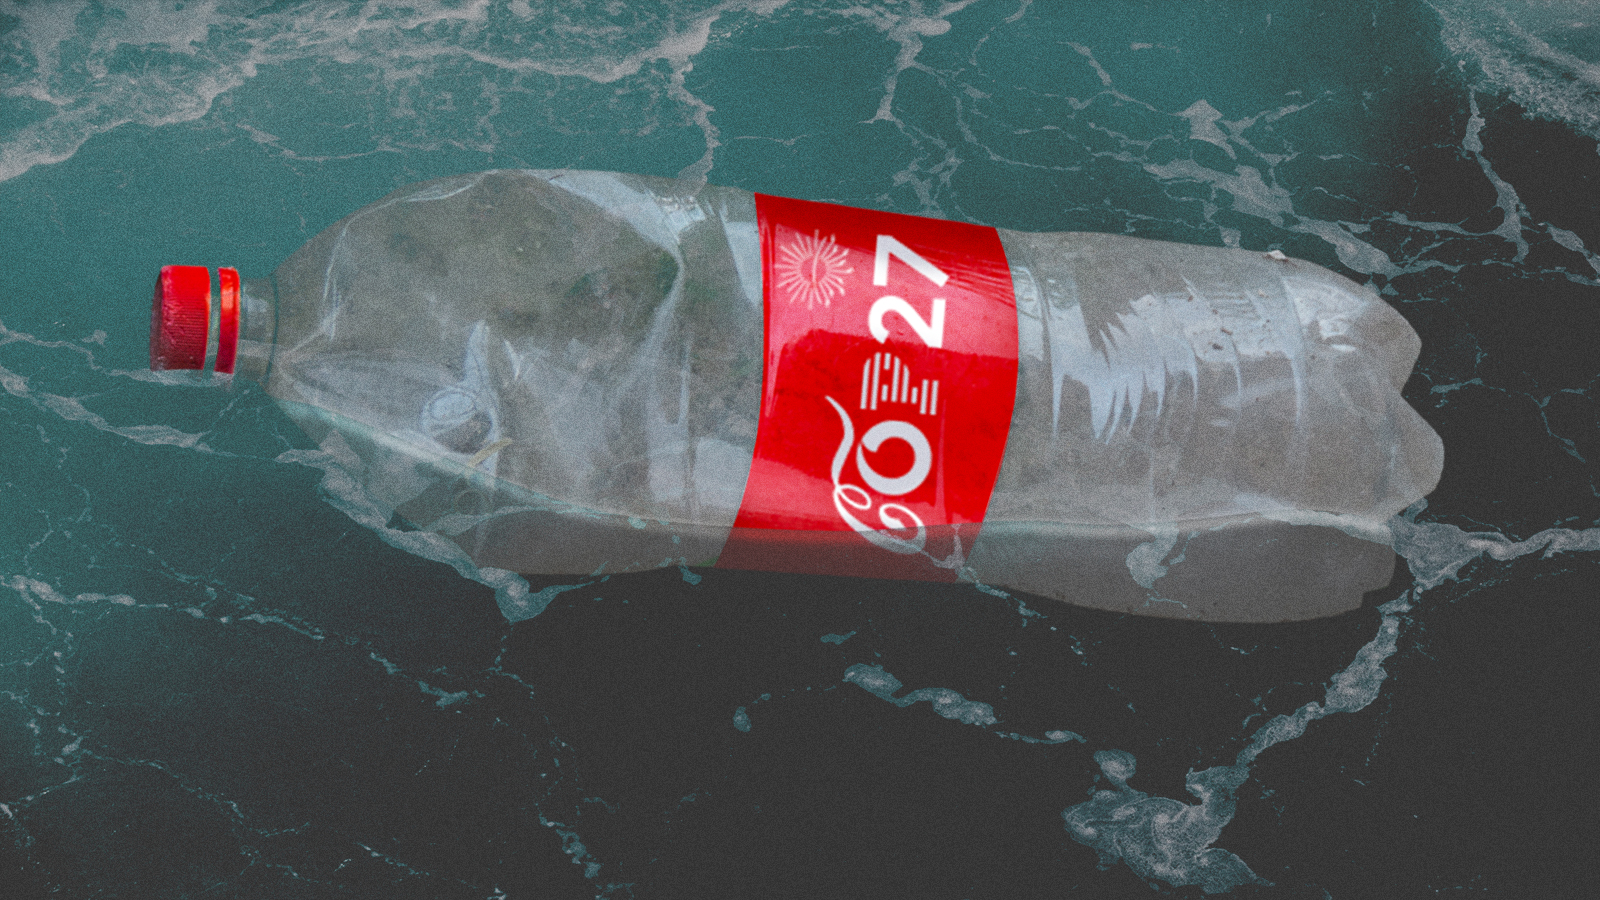 Photoshopped Coke bottle with COP27 logo on it floating in water